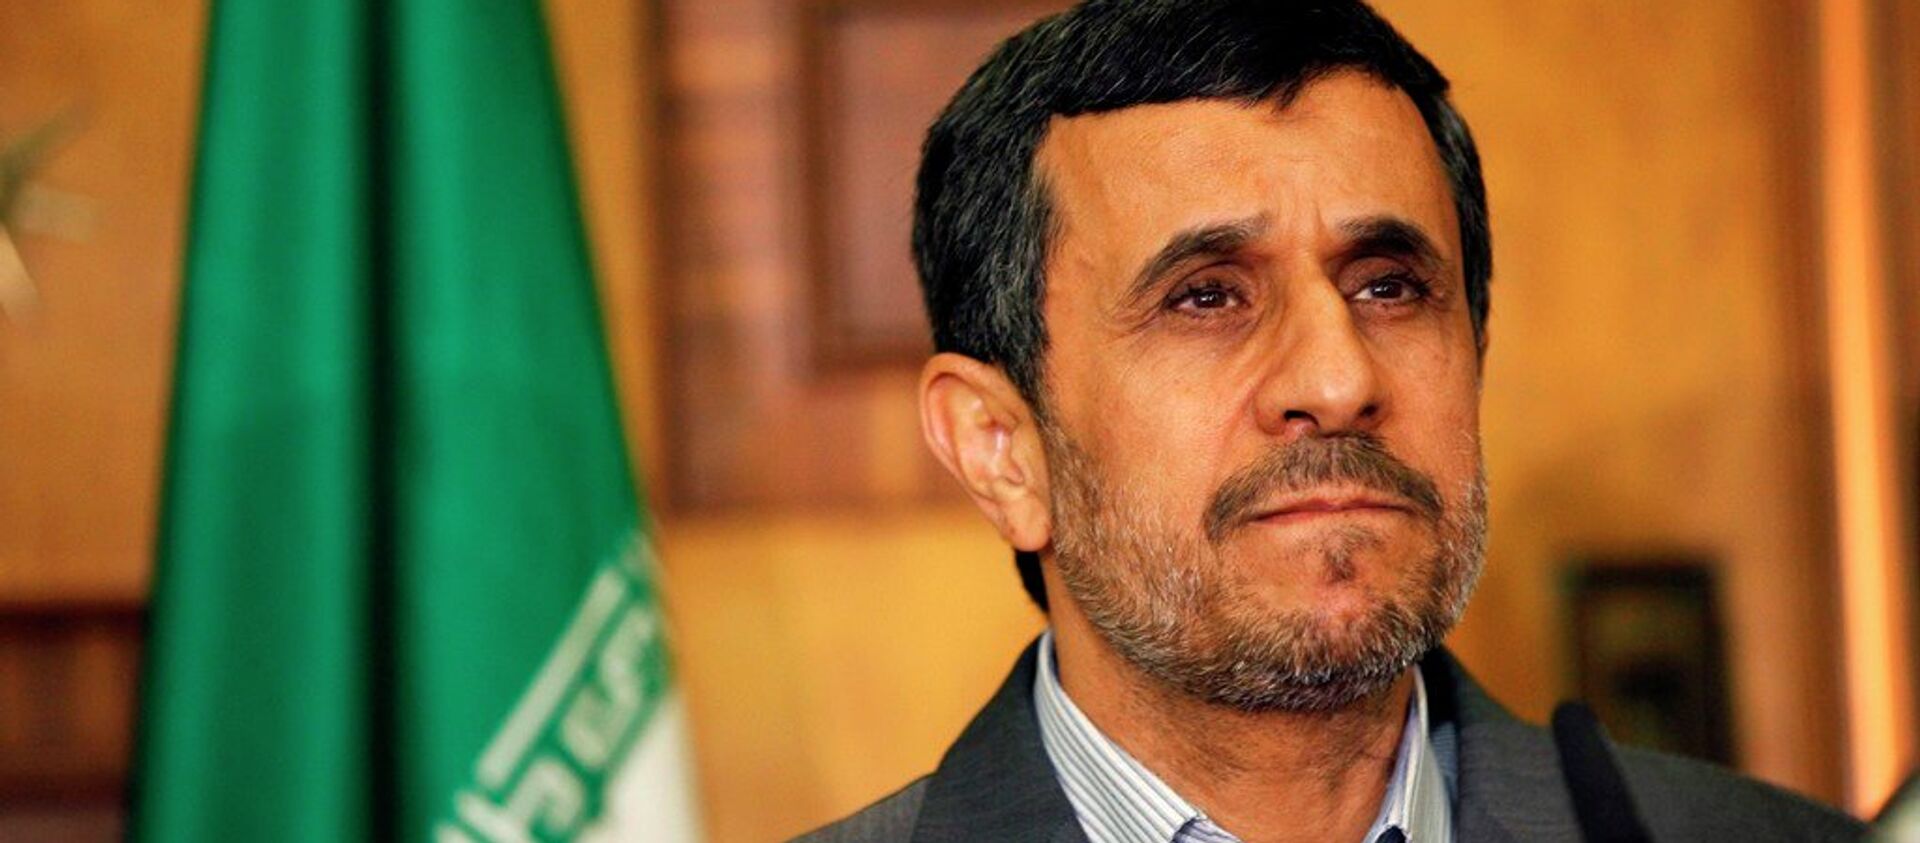 İran eski Cumhurbaşkanı Mahmud Ahmedinejad - Sputnik Türkiye, 1920, 20.04.2017